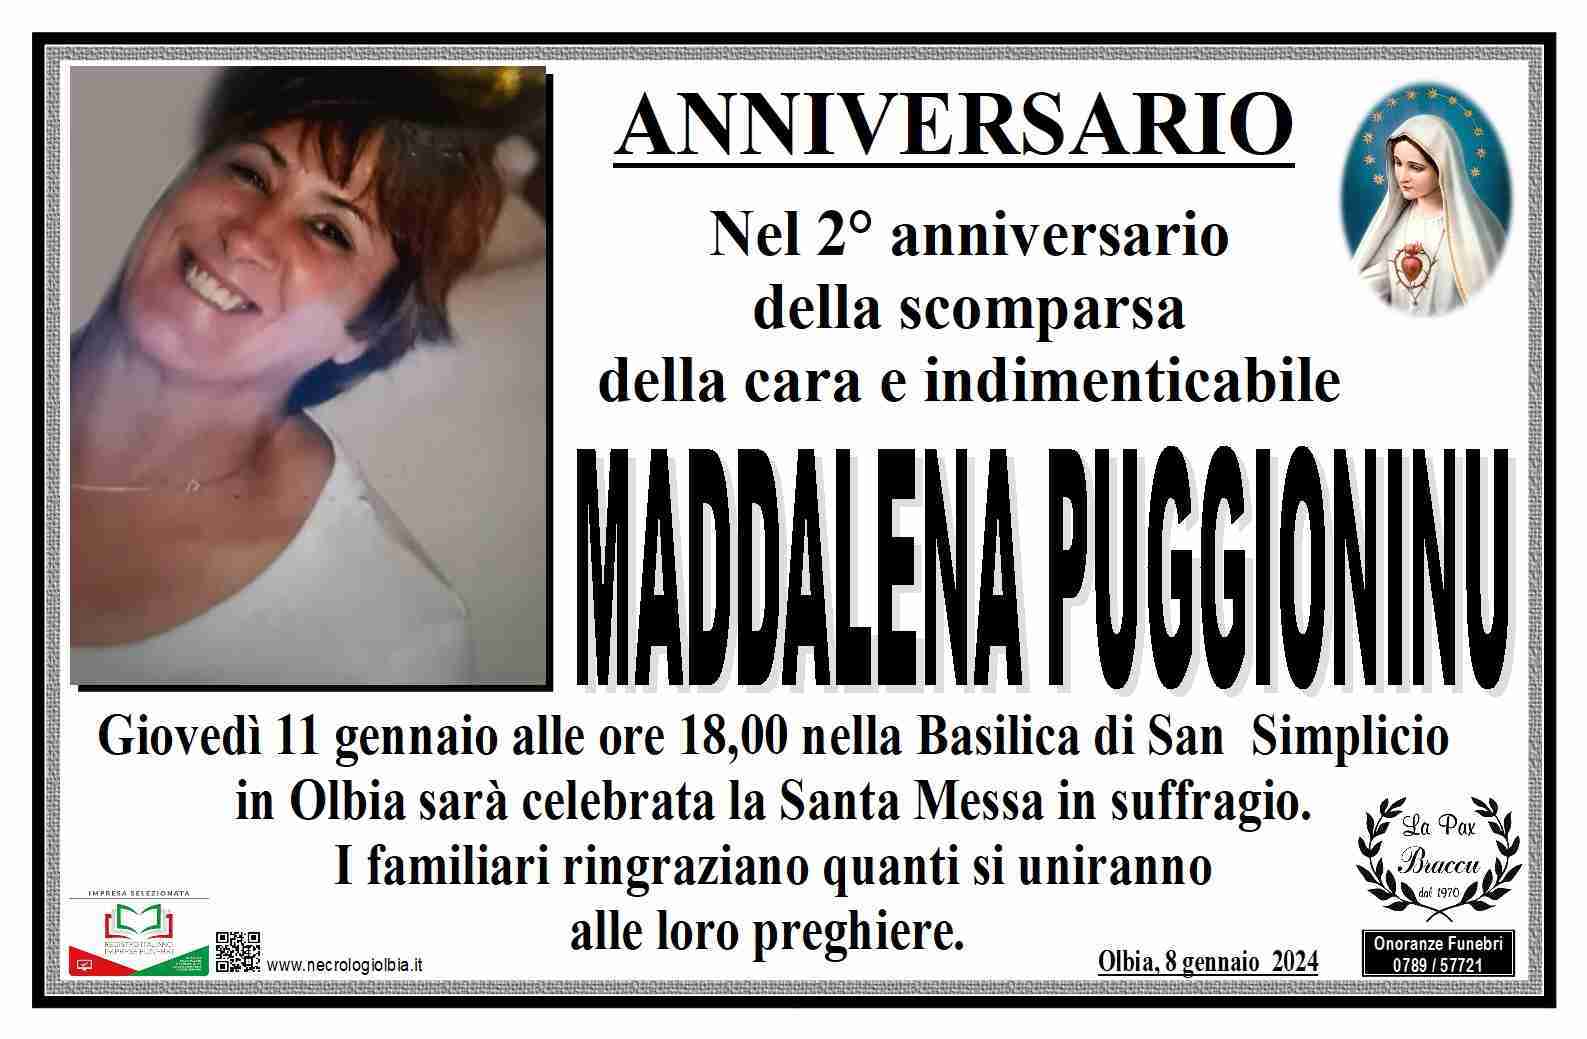 Maddalena Puggioninu